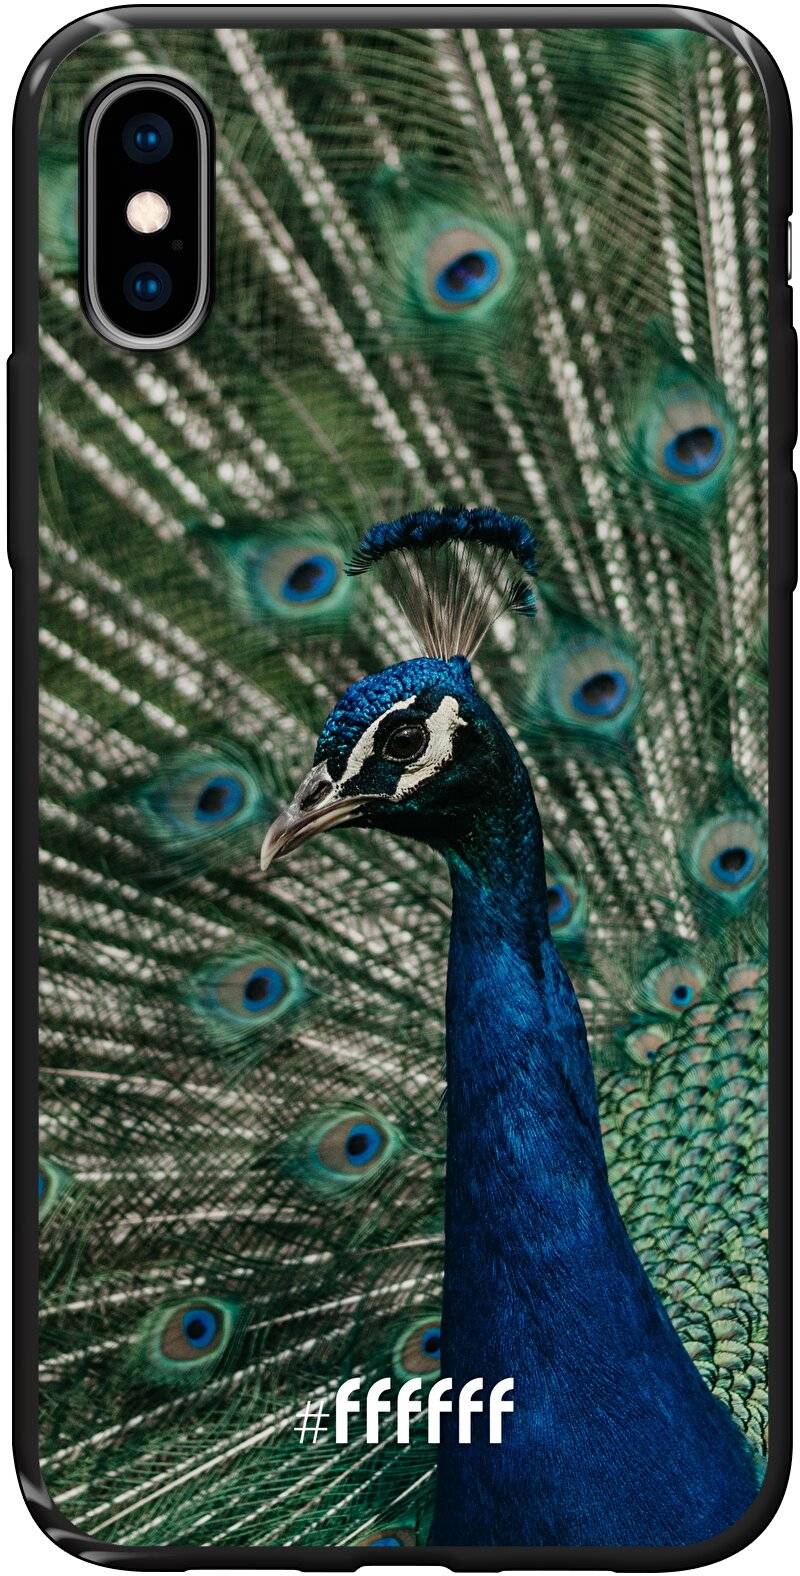 Peacock iPhone X